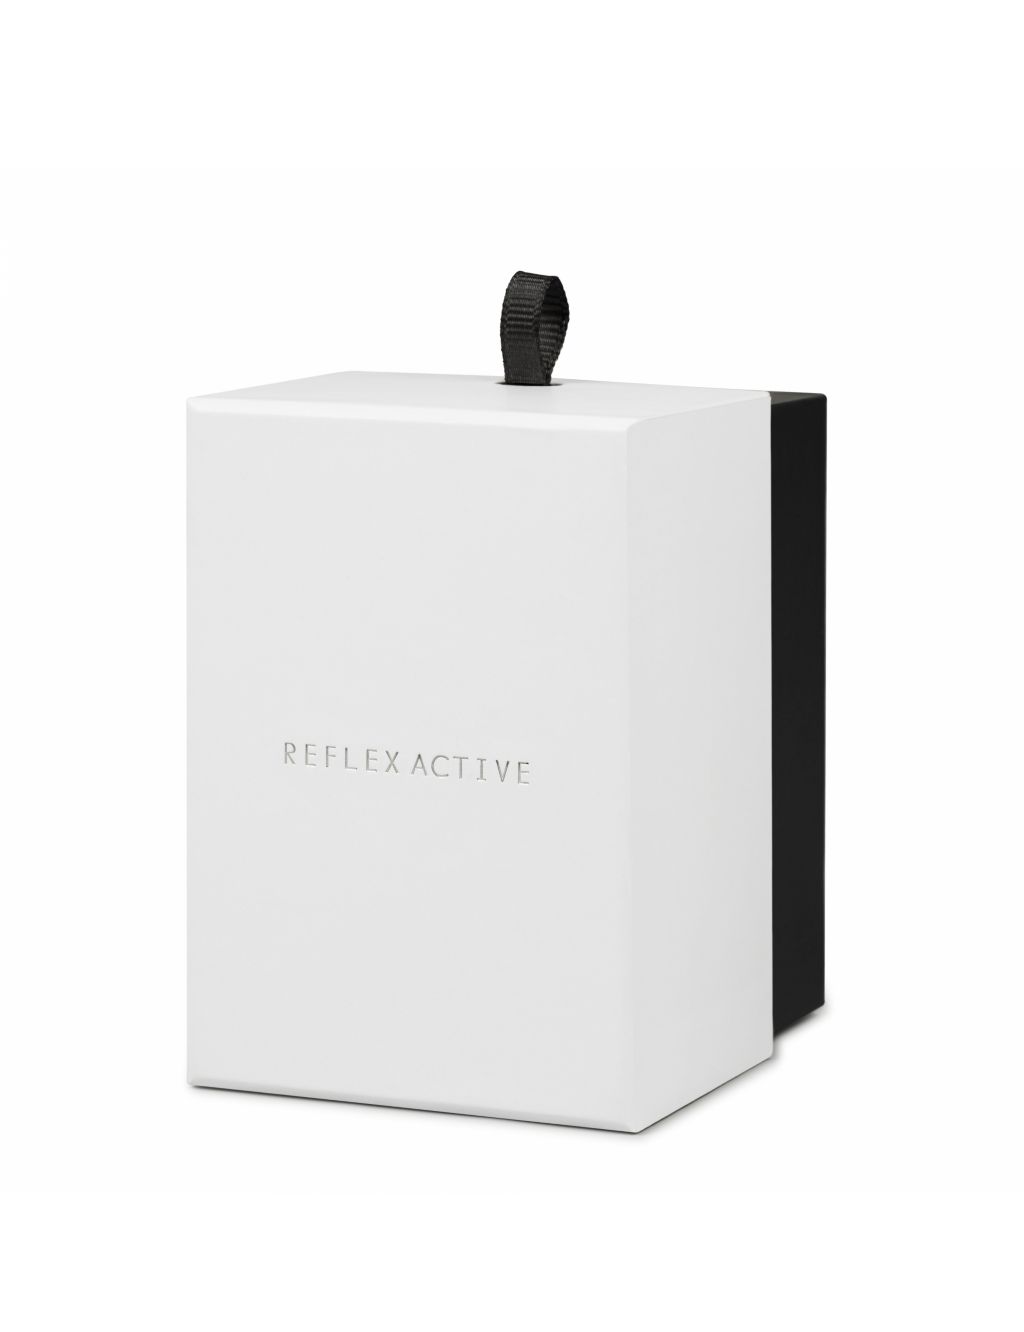 Reflex Active Black Smartwatch image 4